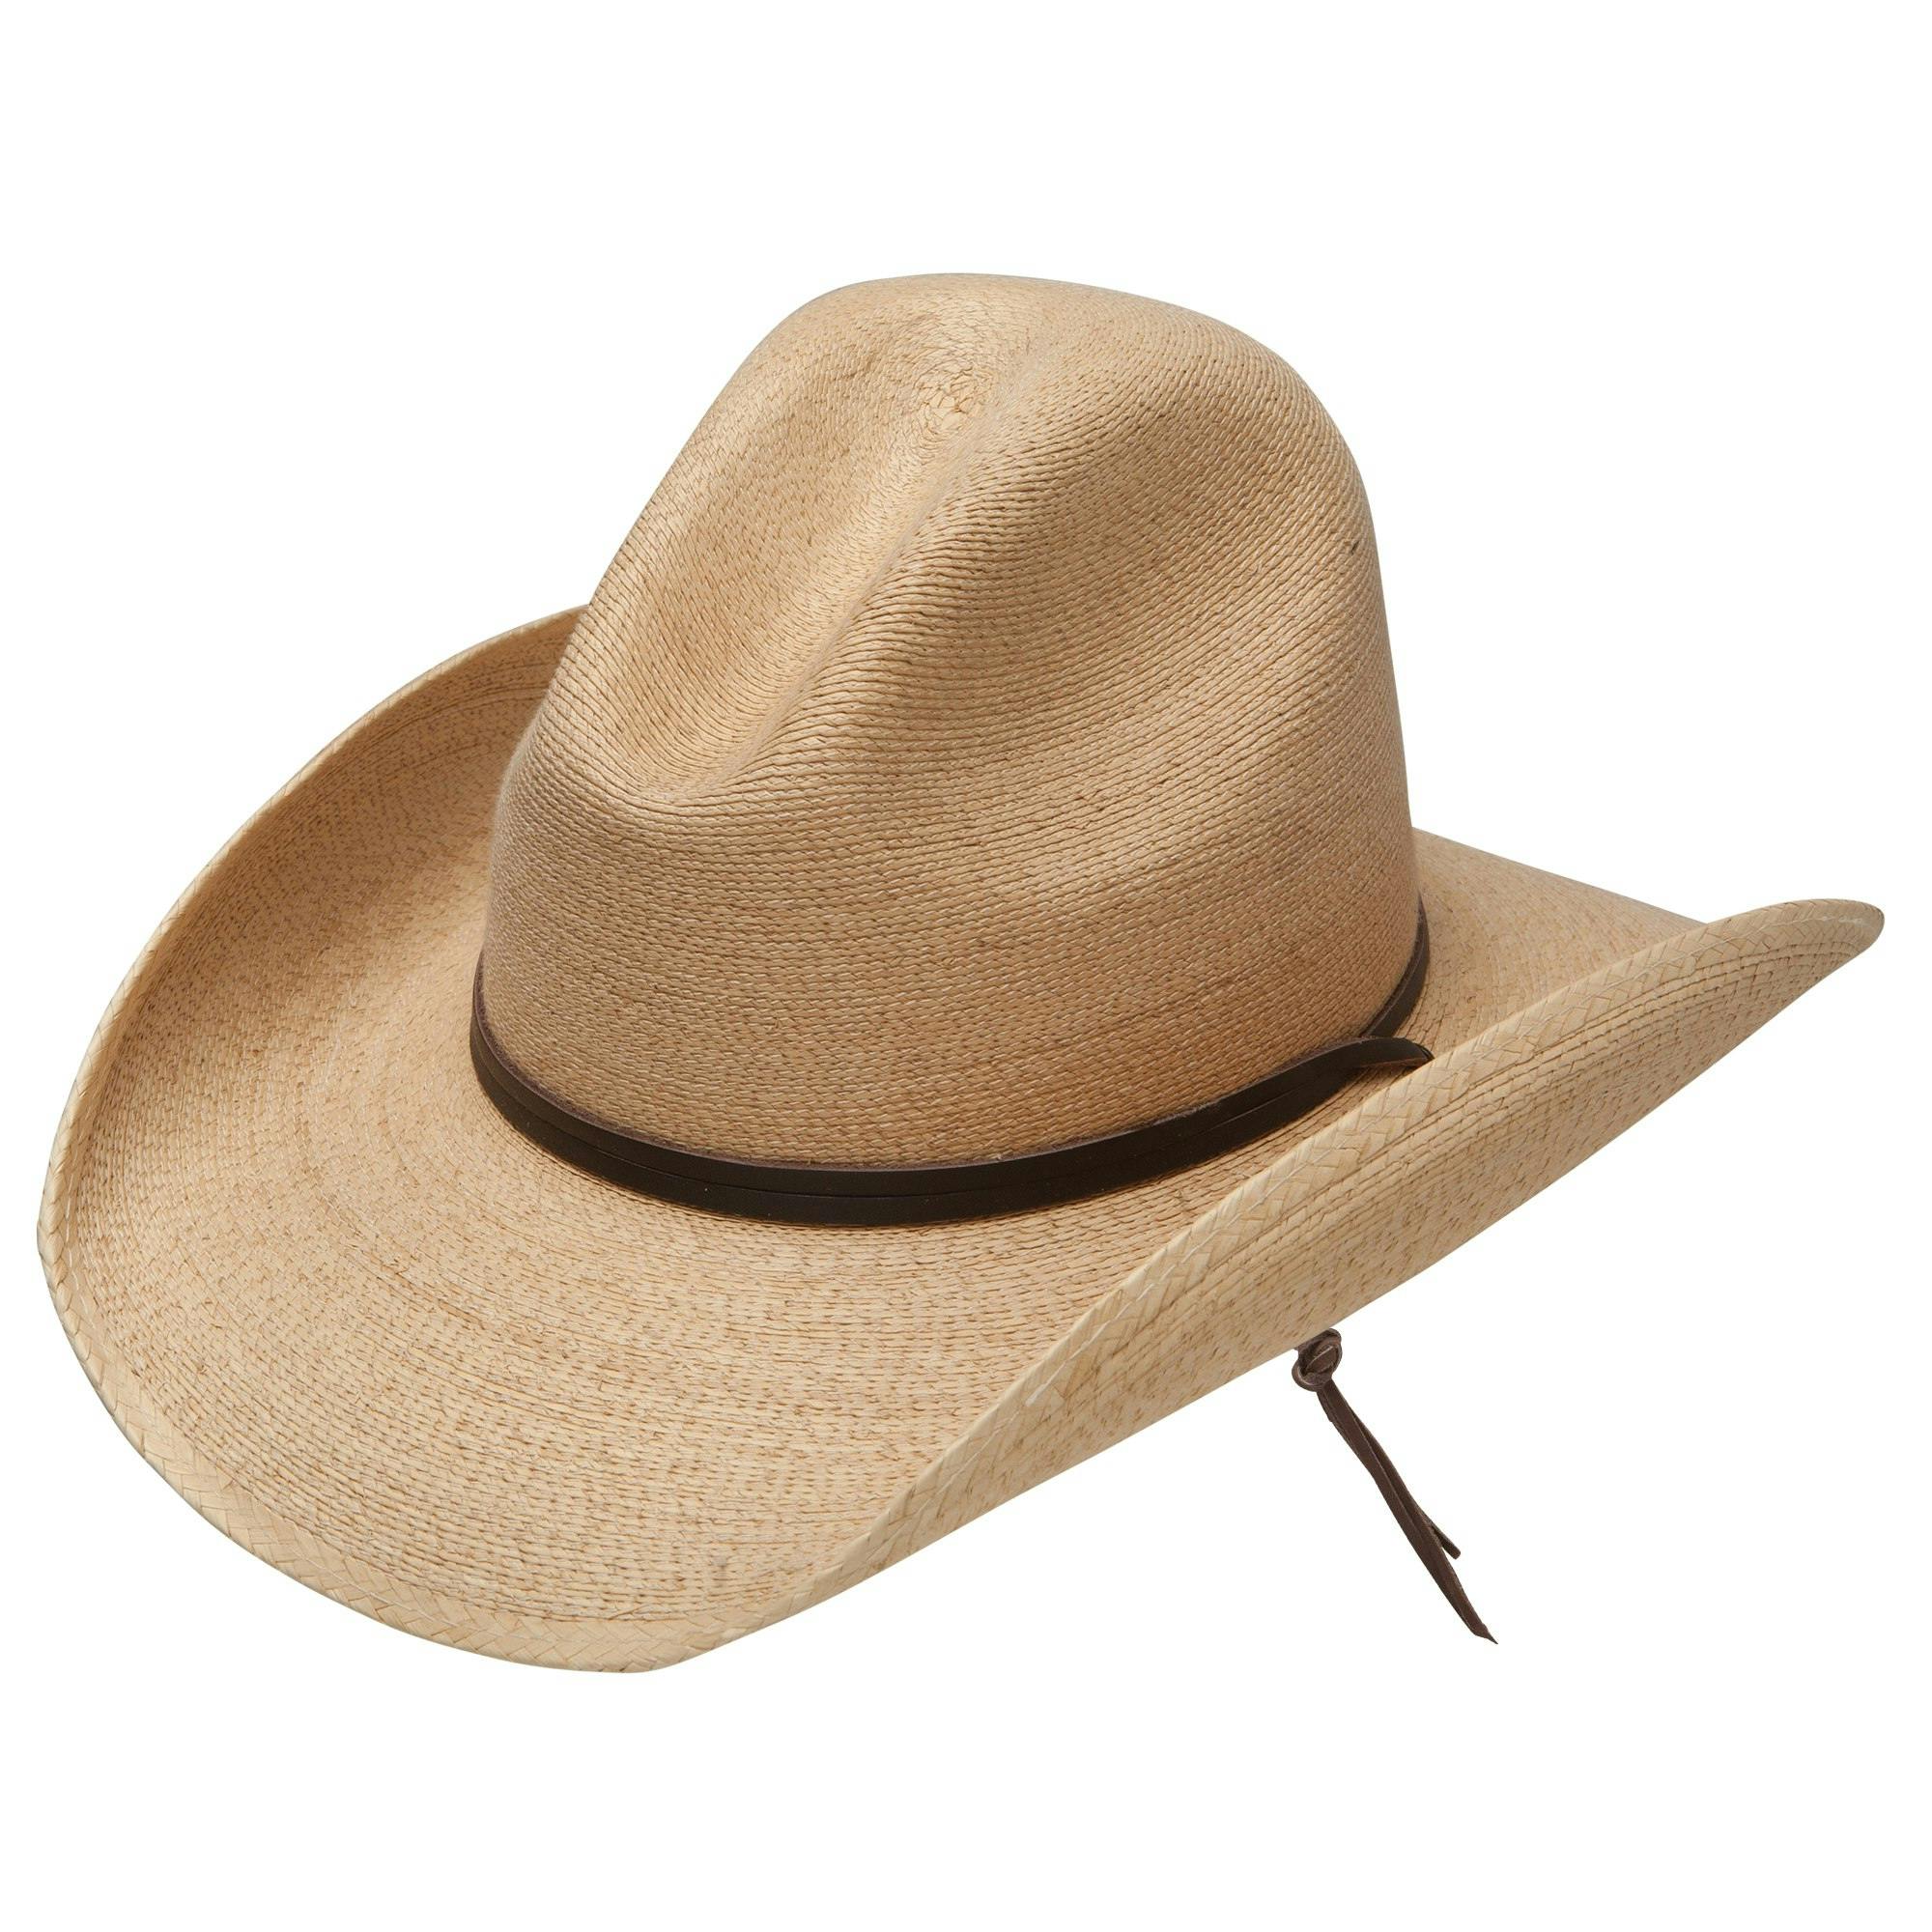 The Bryce Straw Hat